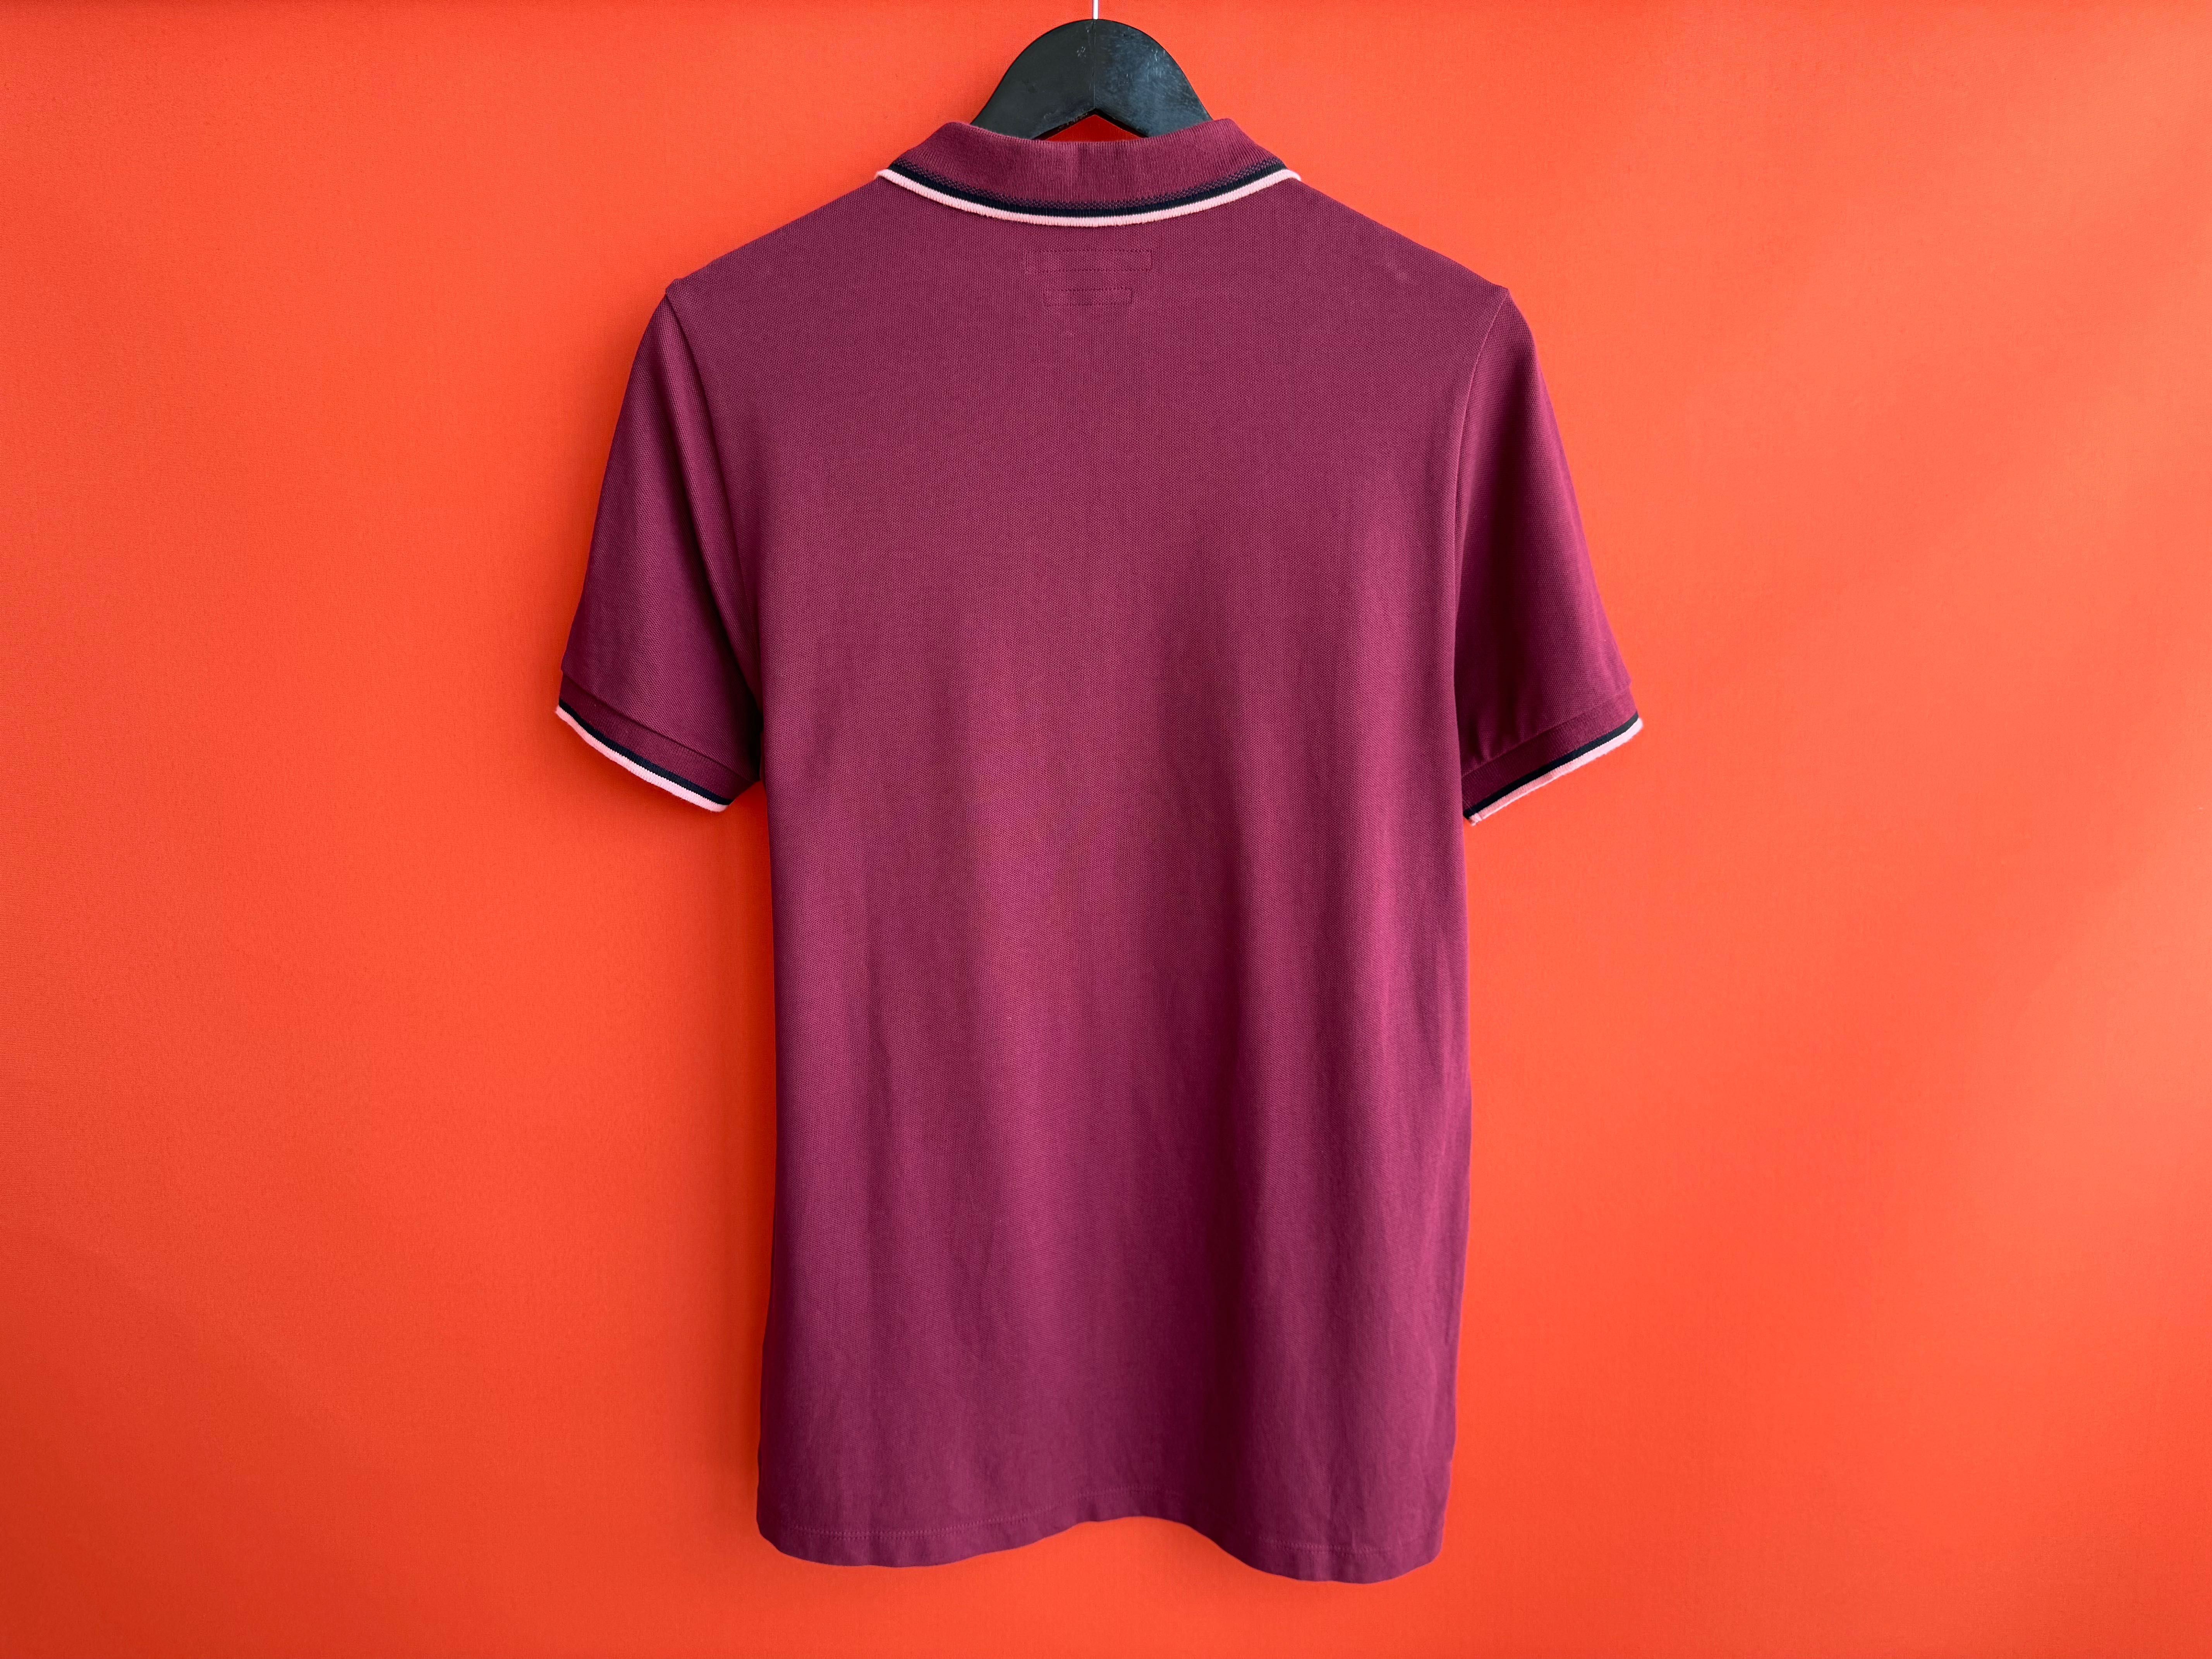 Marc O’Polo оригинал мужская футболка с воротником поло размер M Б У